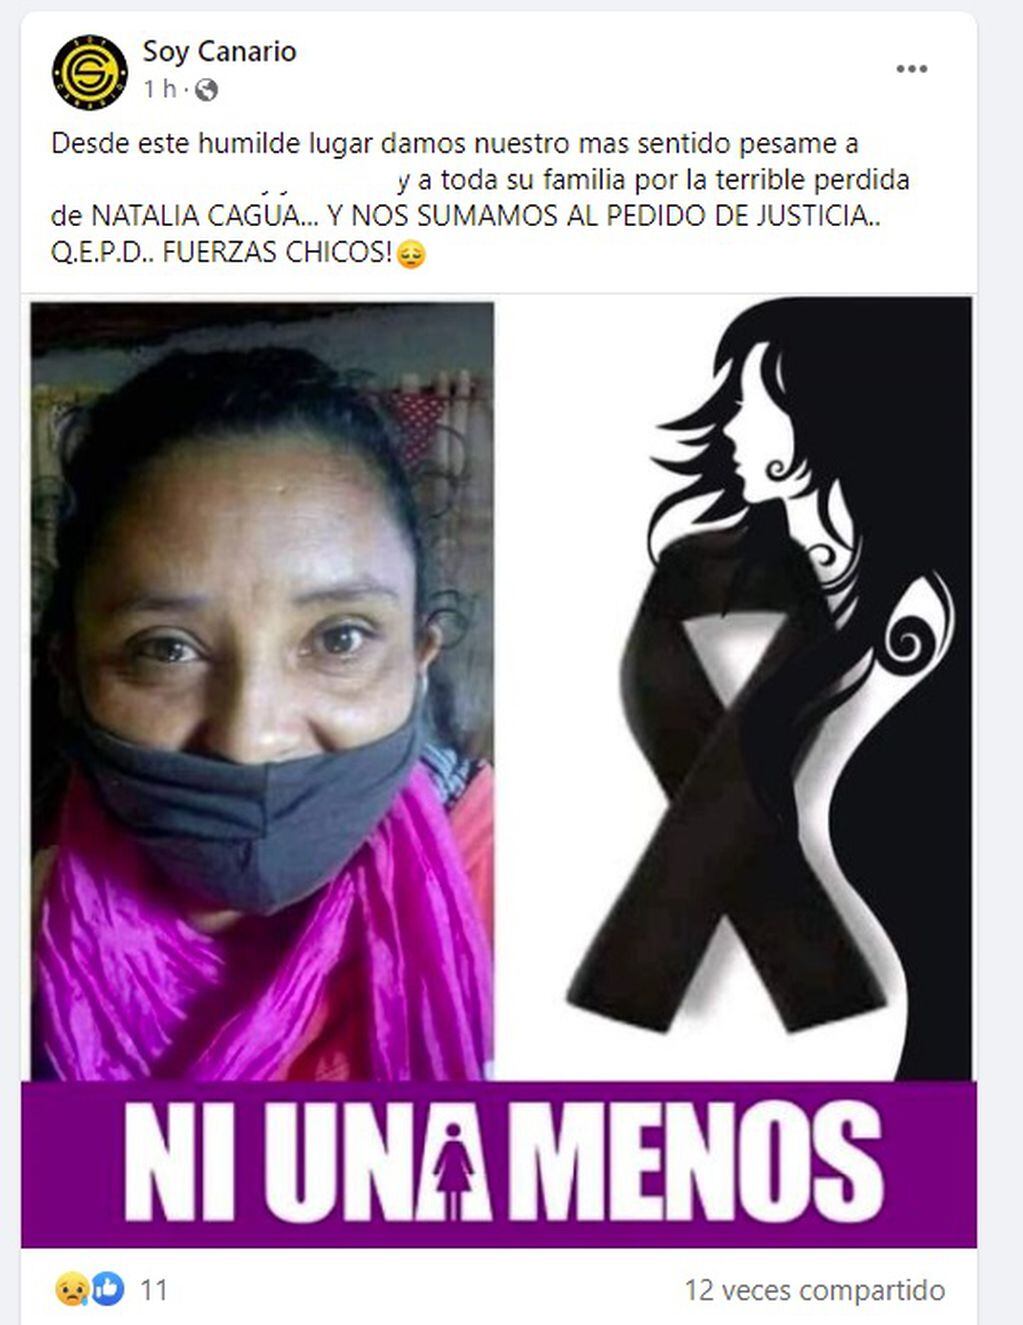 Convocan a una marcha en reclamo de justicia por el femicidio de Natalia Tagua en San Rafael